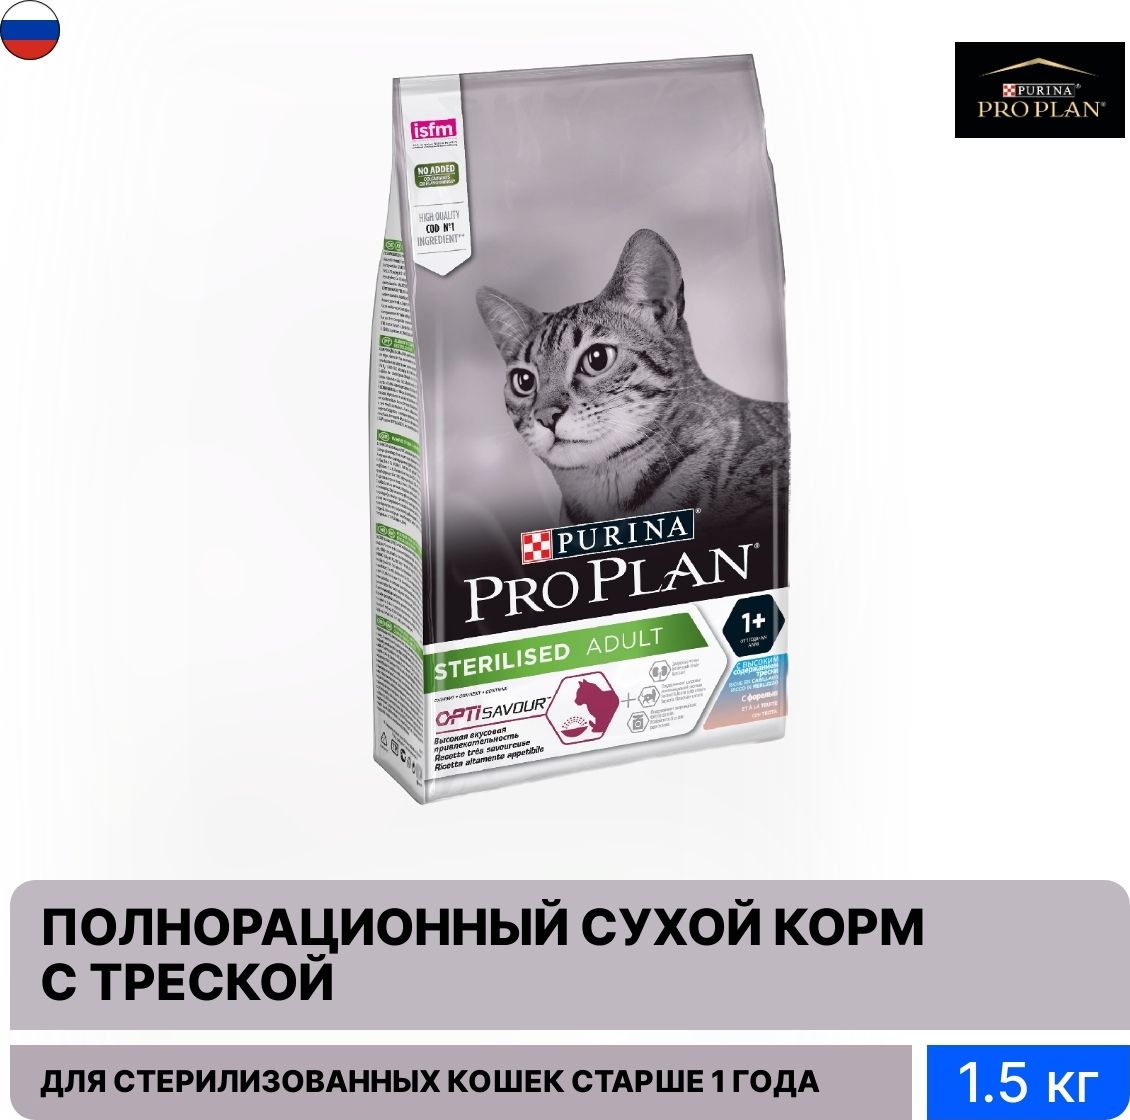 Pro plan для стерилизованных 7. Purina Pro Plan реклама. Pro Plan Live Clear Sterilized 1,4. Purina PROPLAN Baner. Реклама корма Пурина.